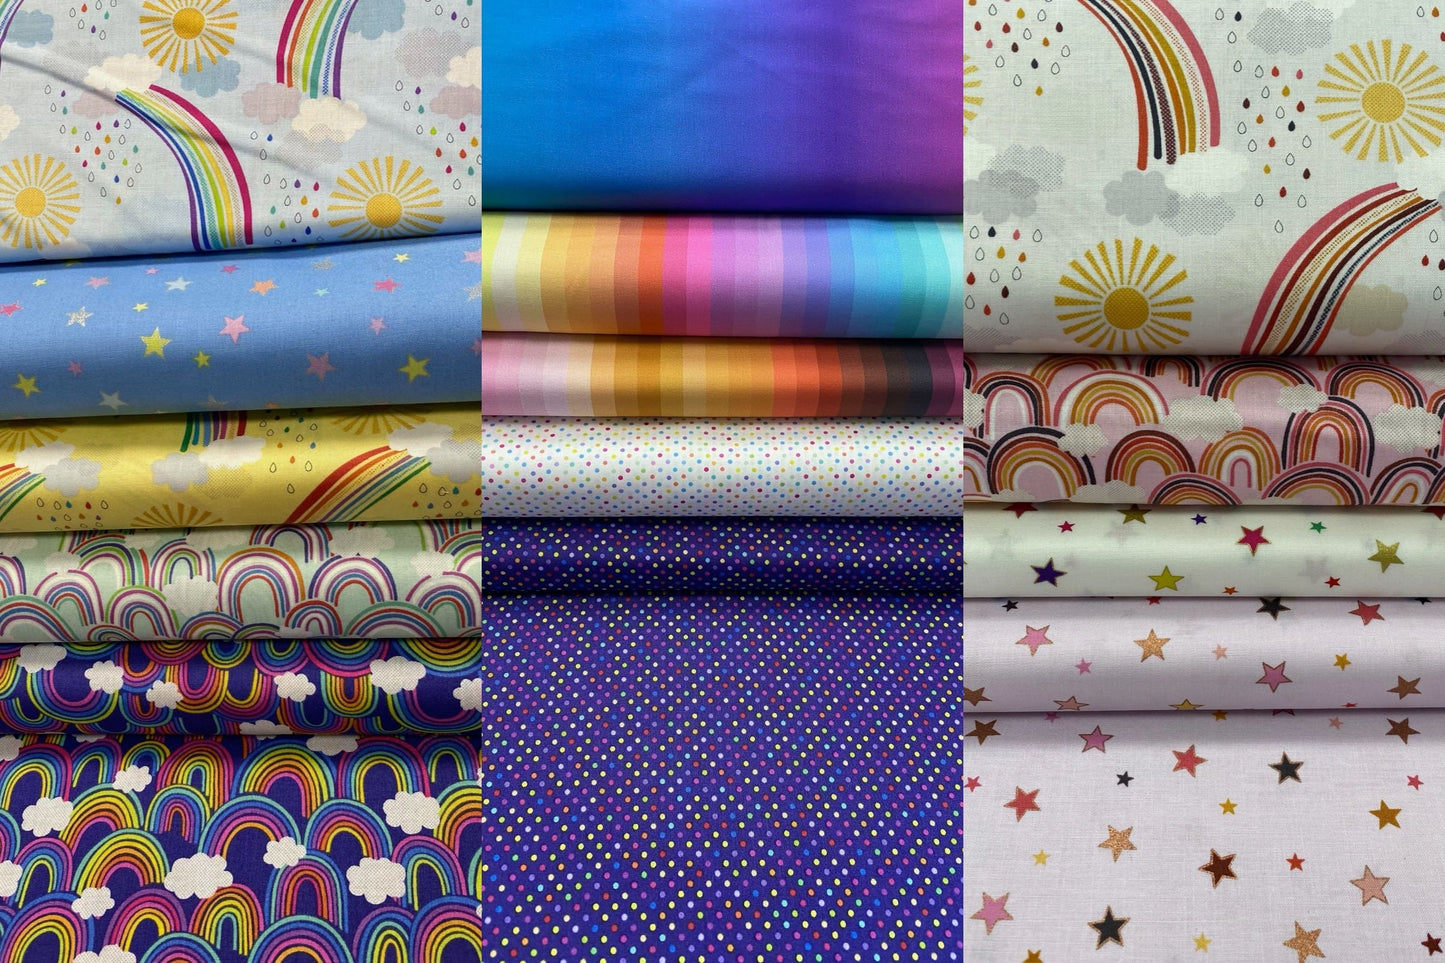 Rainbows Bright Rainbow Dots A440-2 Cotton Woven Fabric